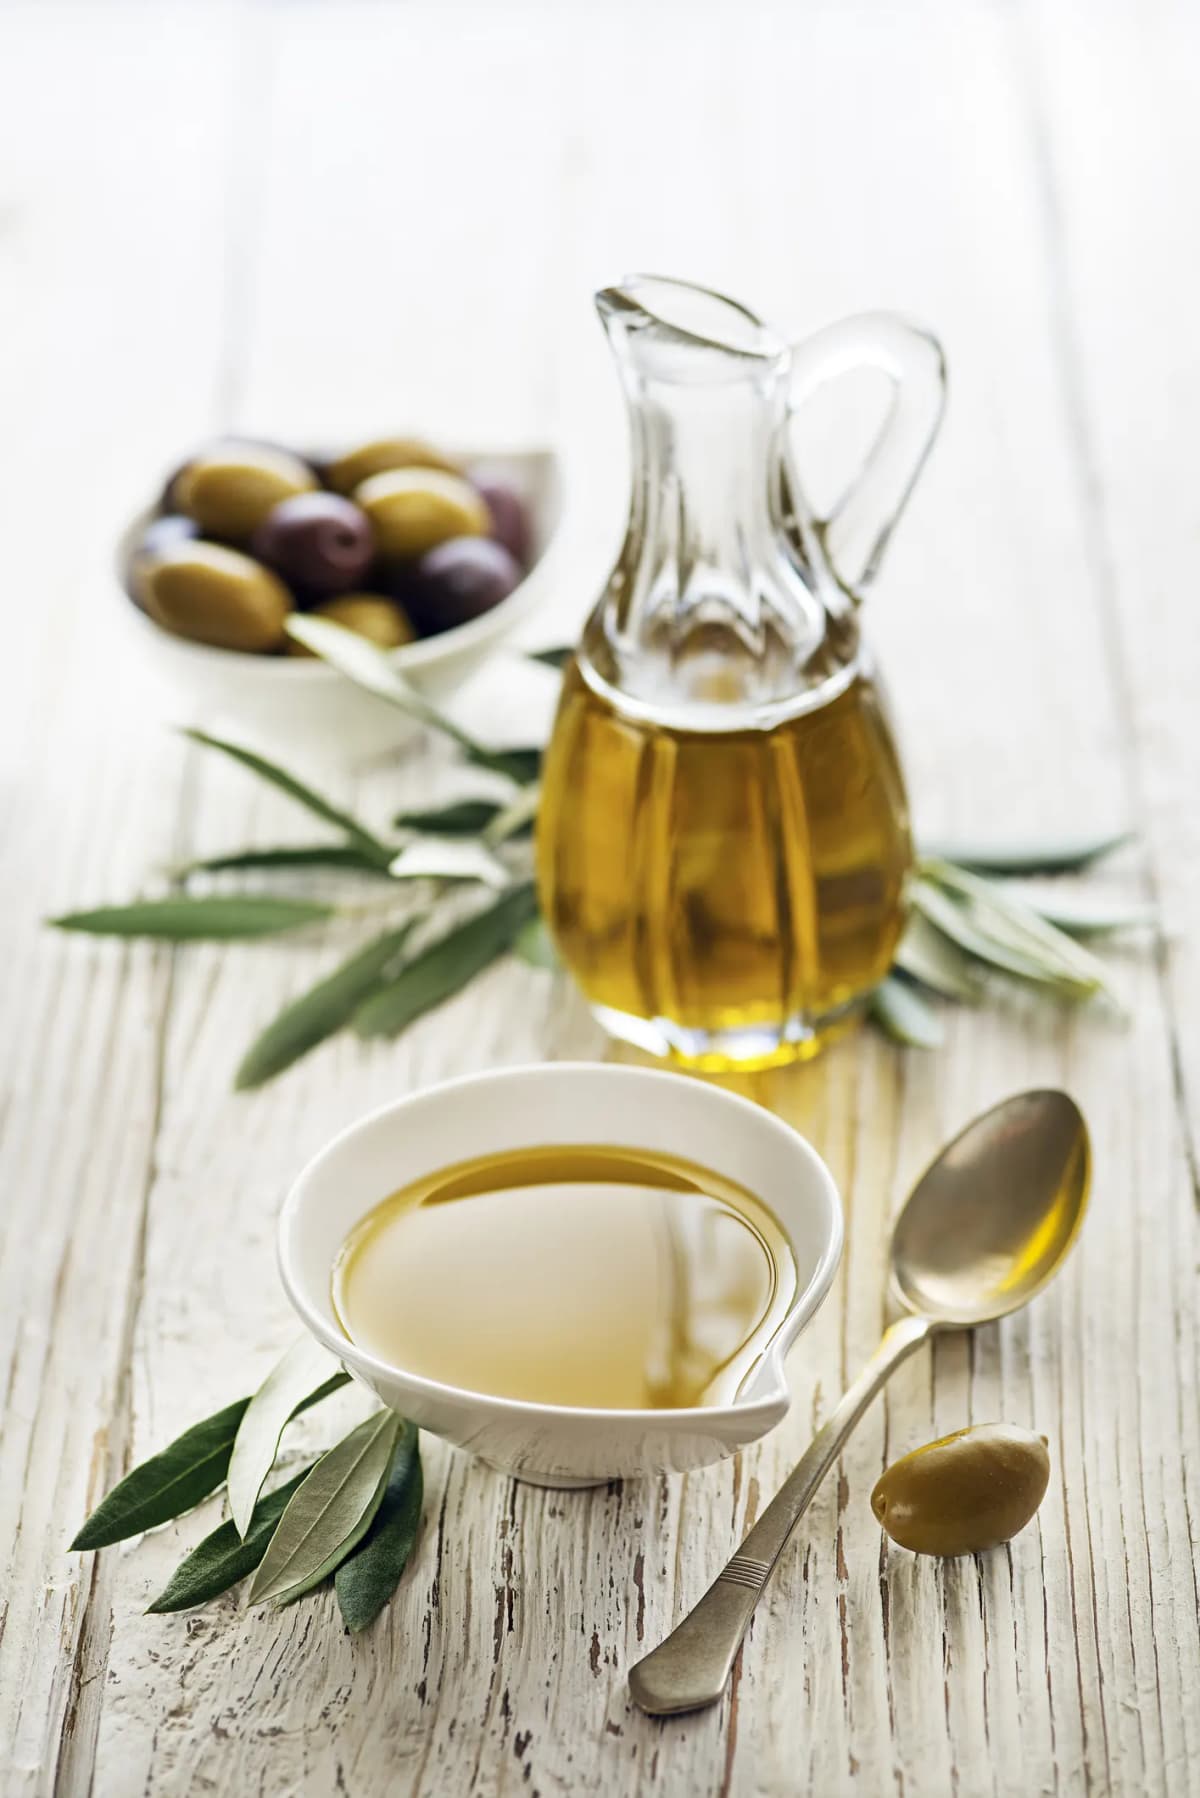 A bowl of olives, olive oil, and a jar of olive oil